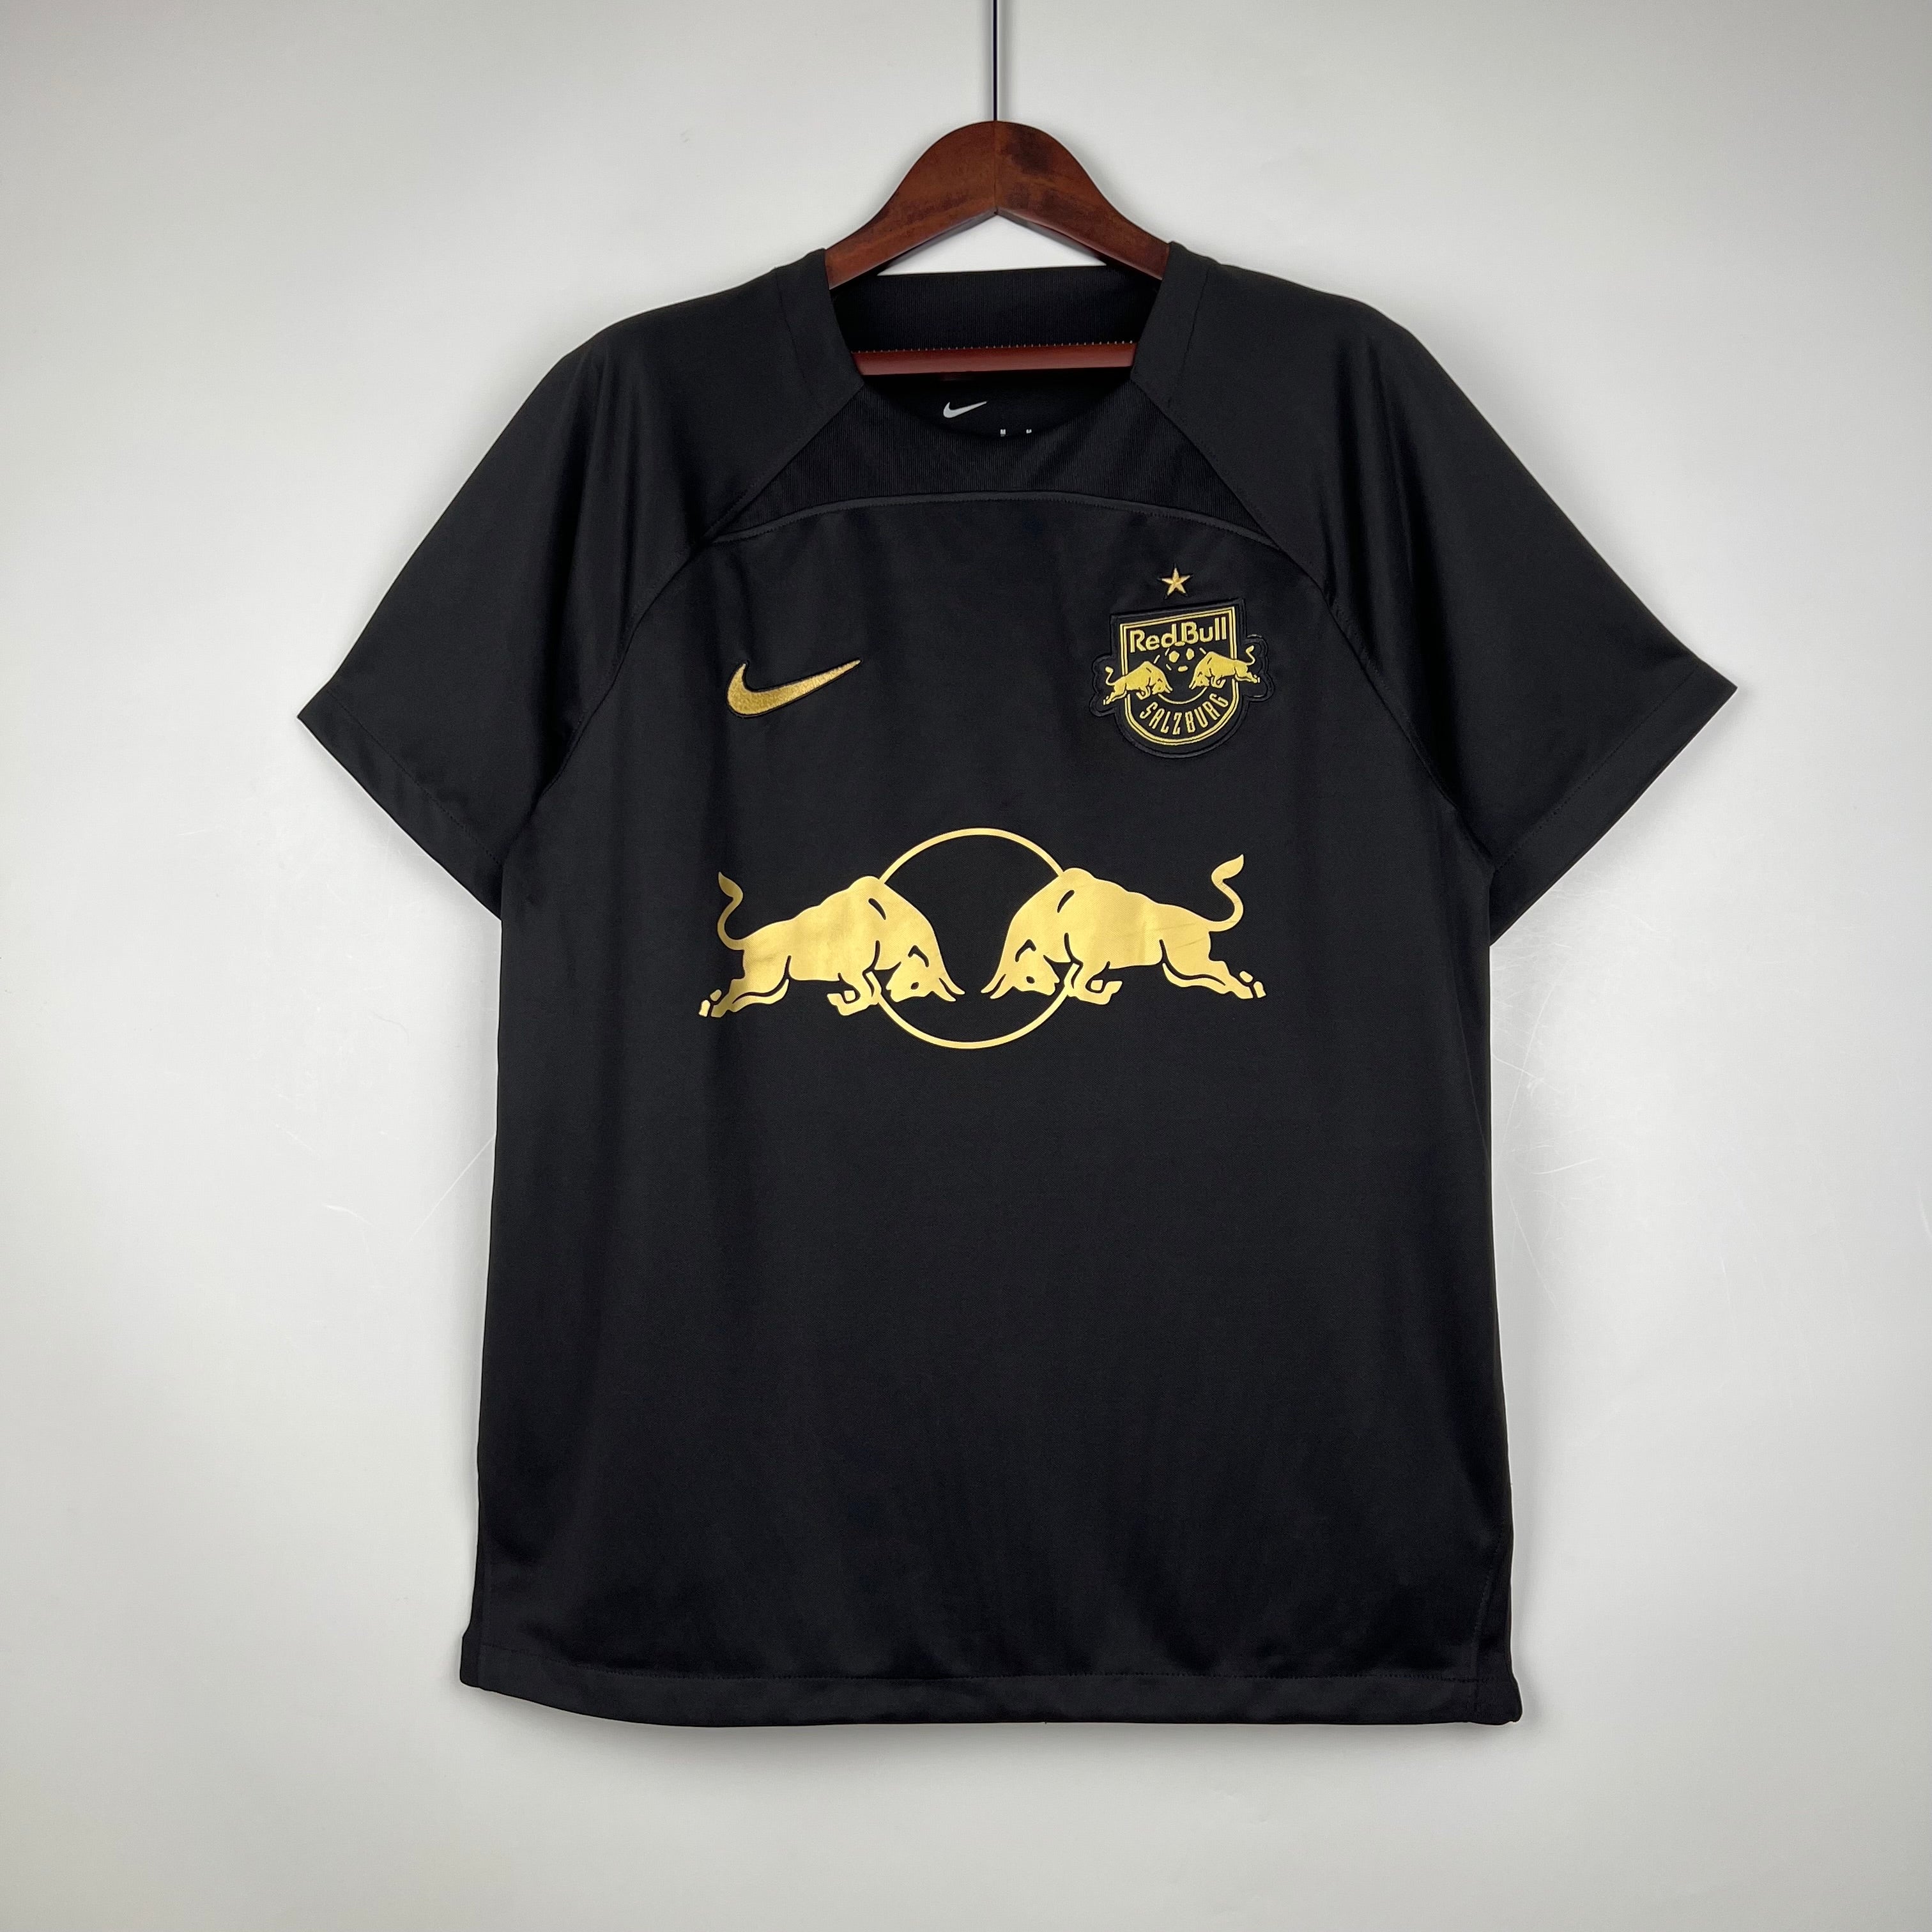 RB Salzburg Special Edition Kit